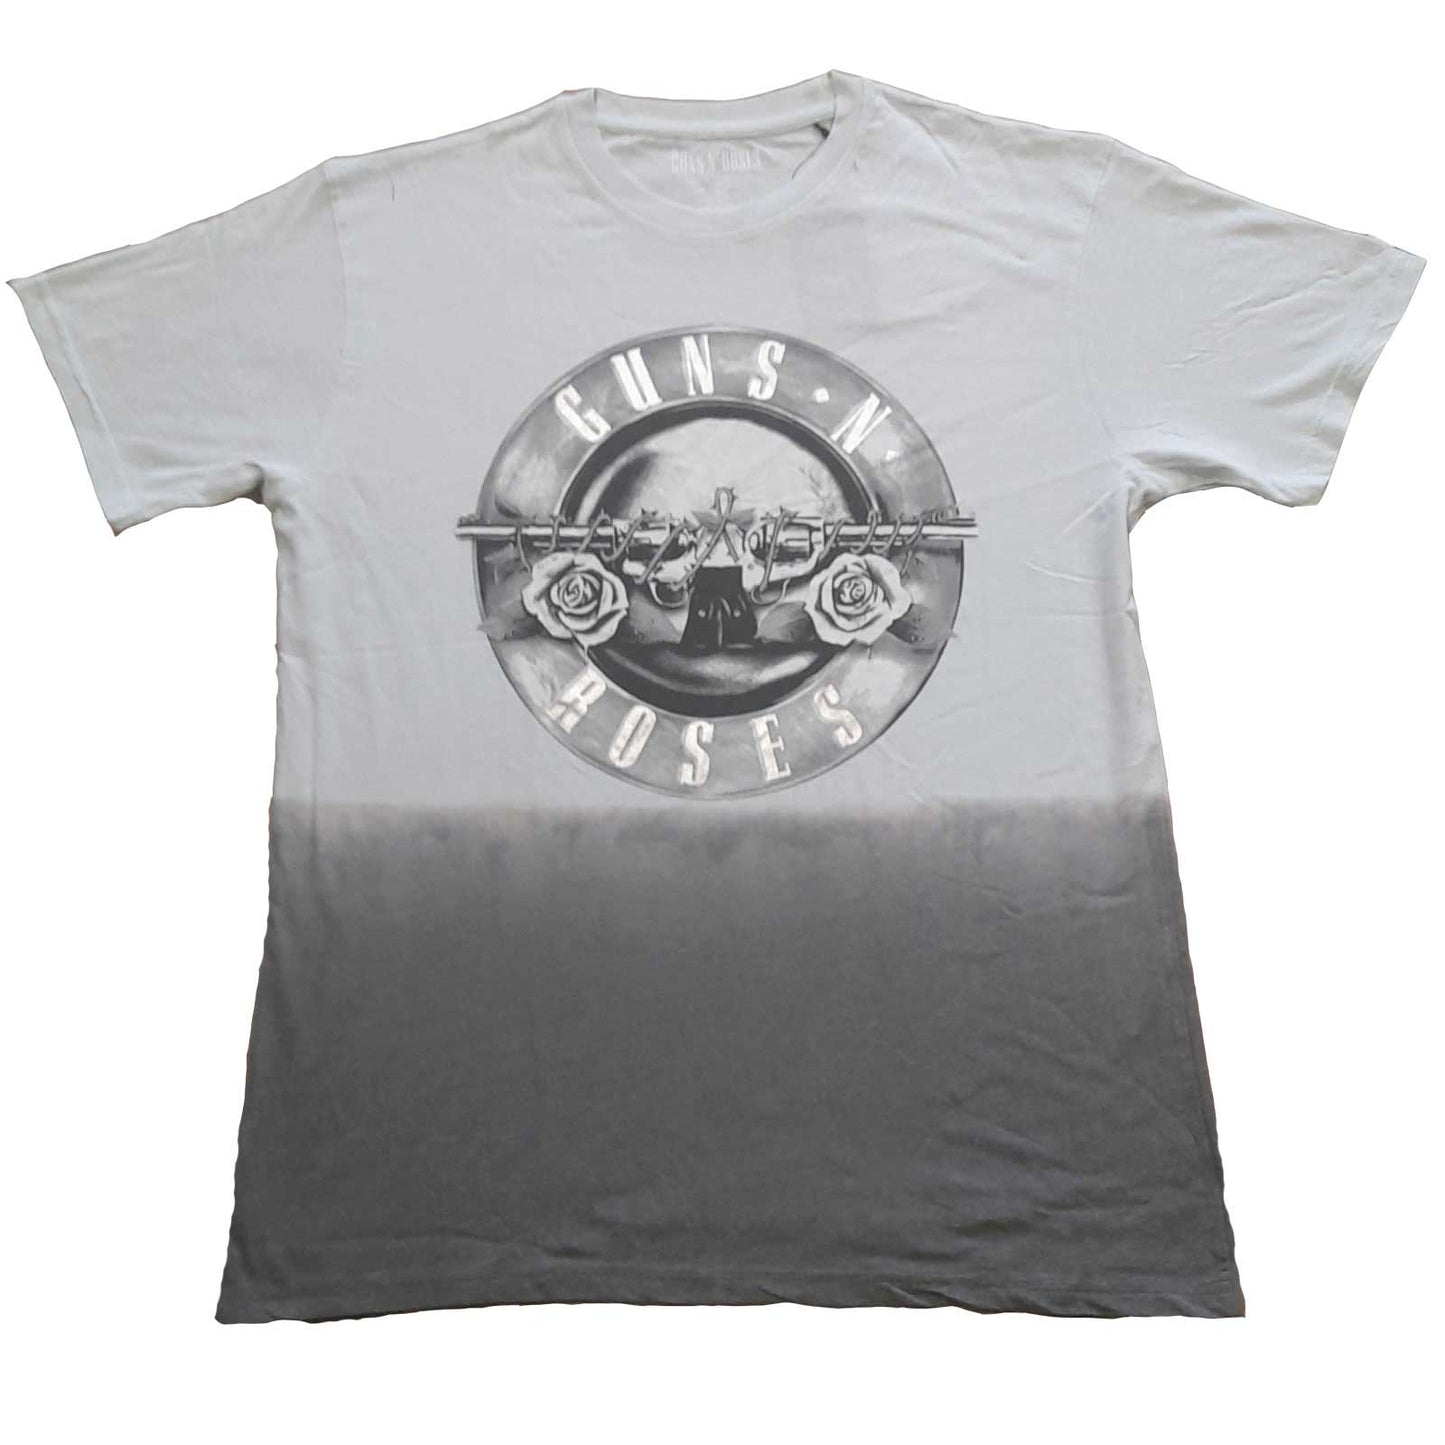 Guns N' Roses Unisex T-Shirt: Tonal Bullet (Wash Collection & Foiled)